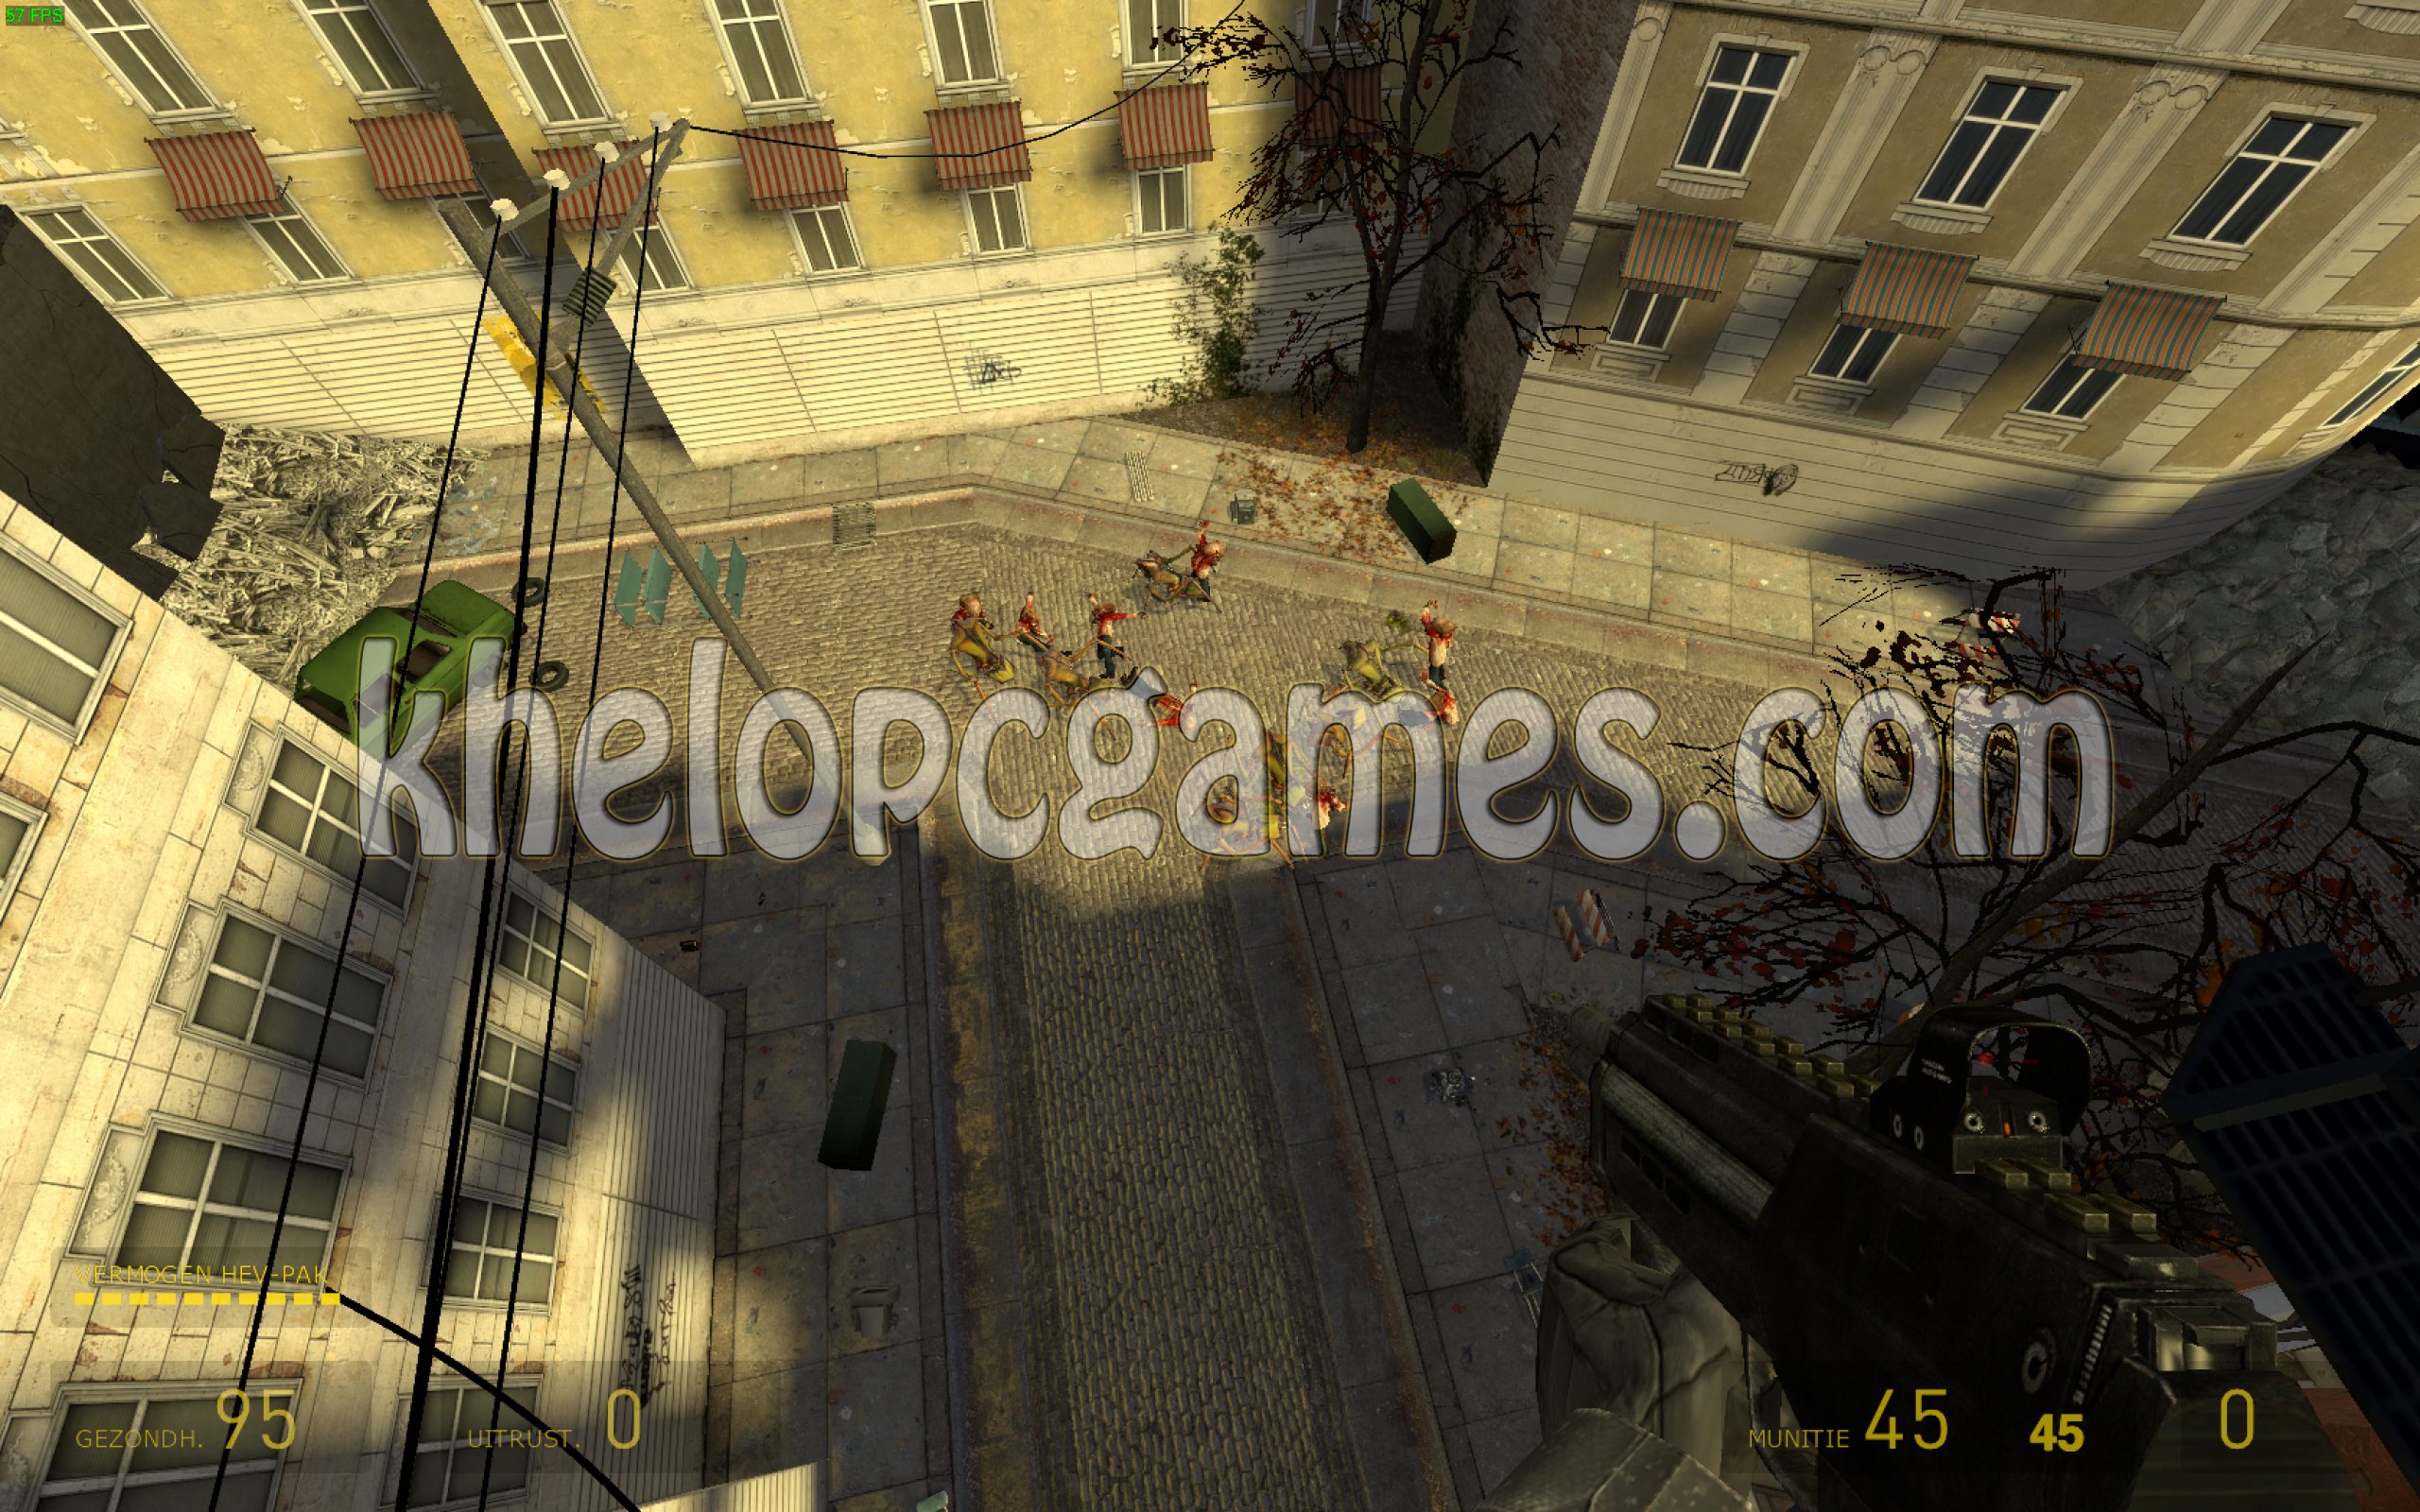 Half Life - Free Download PC Game Full Version